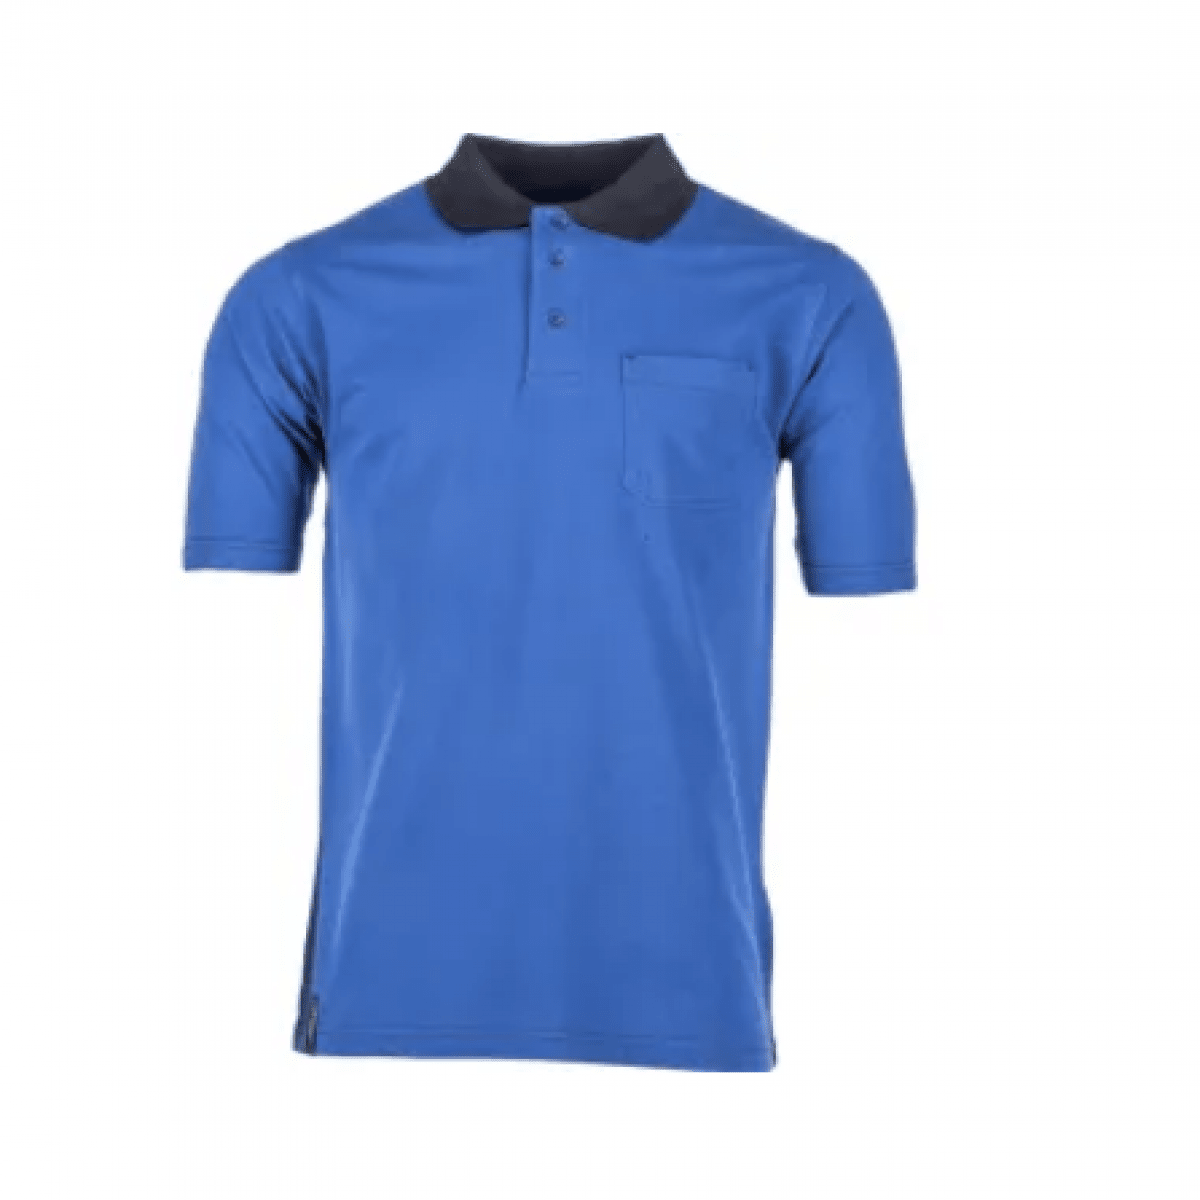 GK/KW106730083056 Polo tričko modré/tmavomodré XL